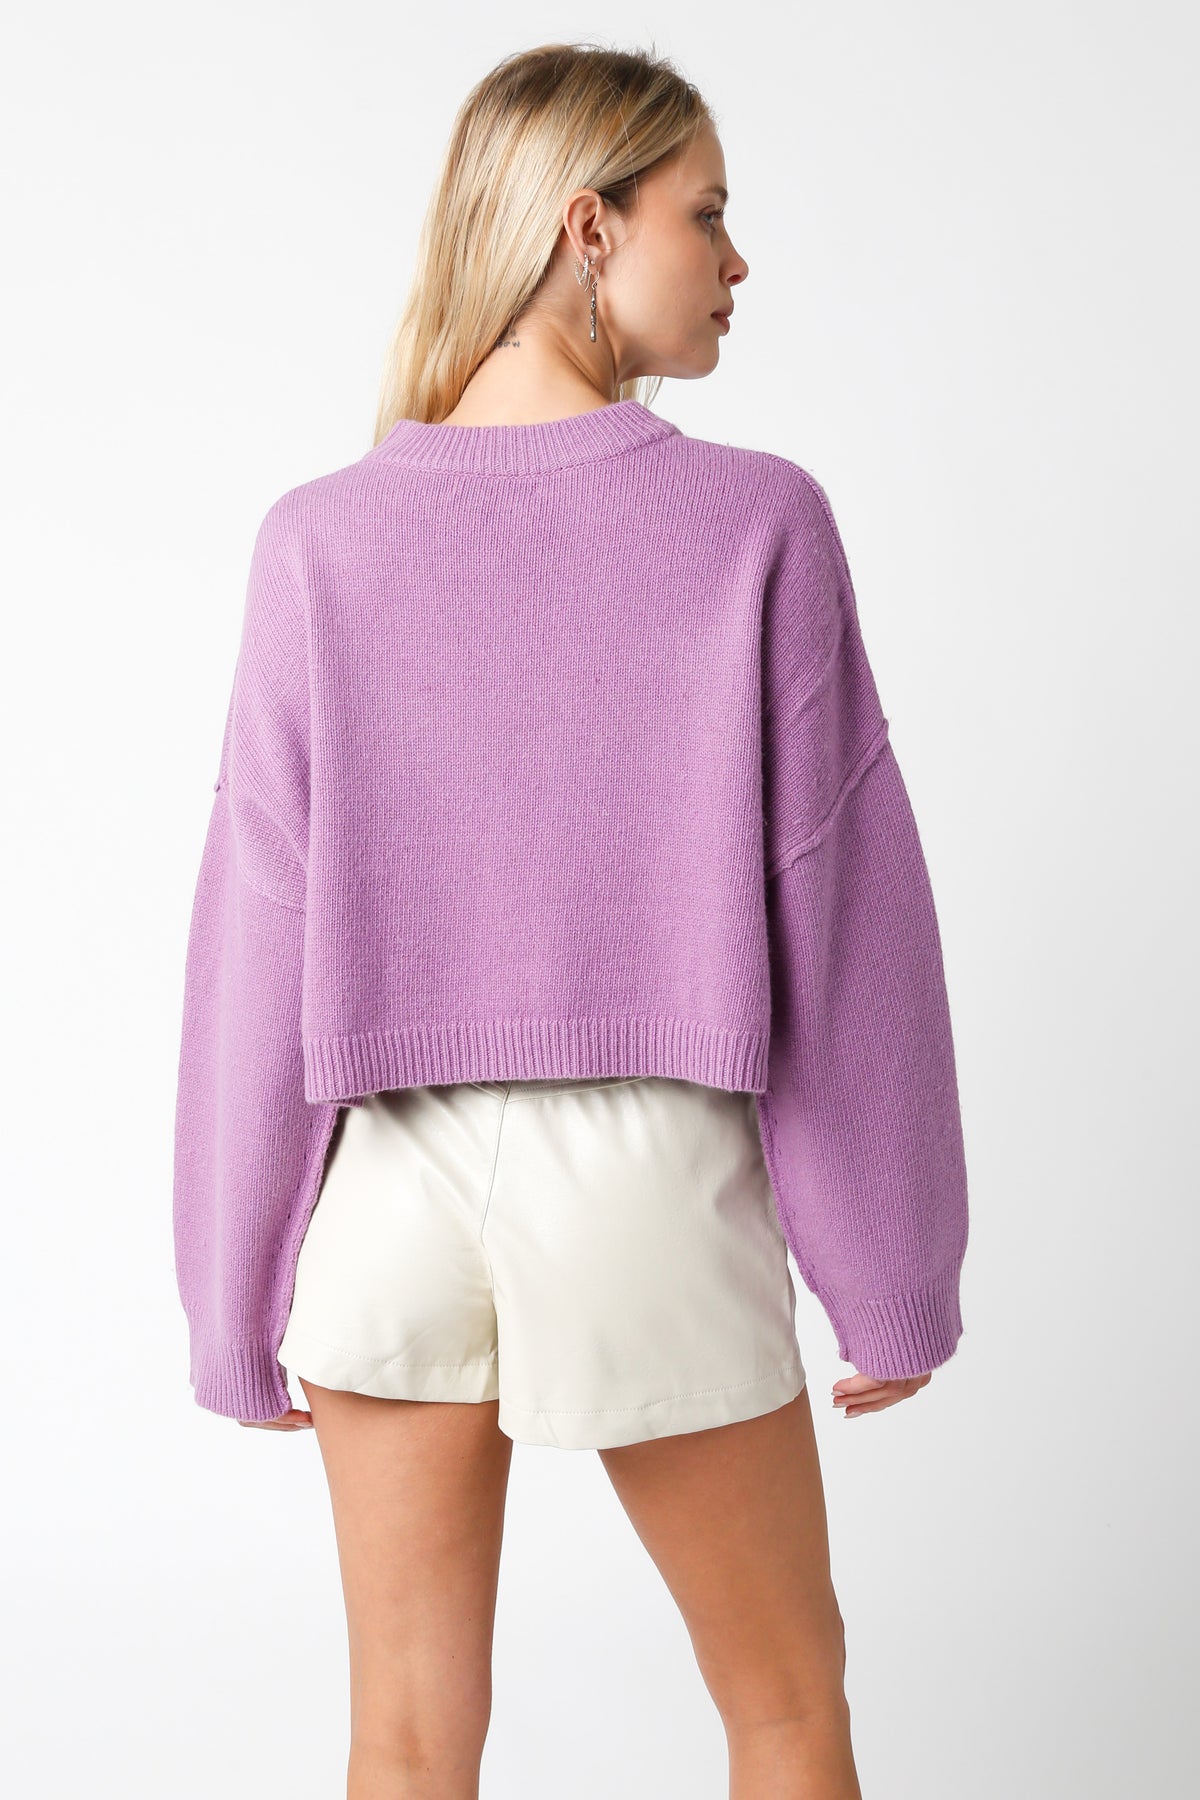 Jalie Sweater